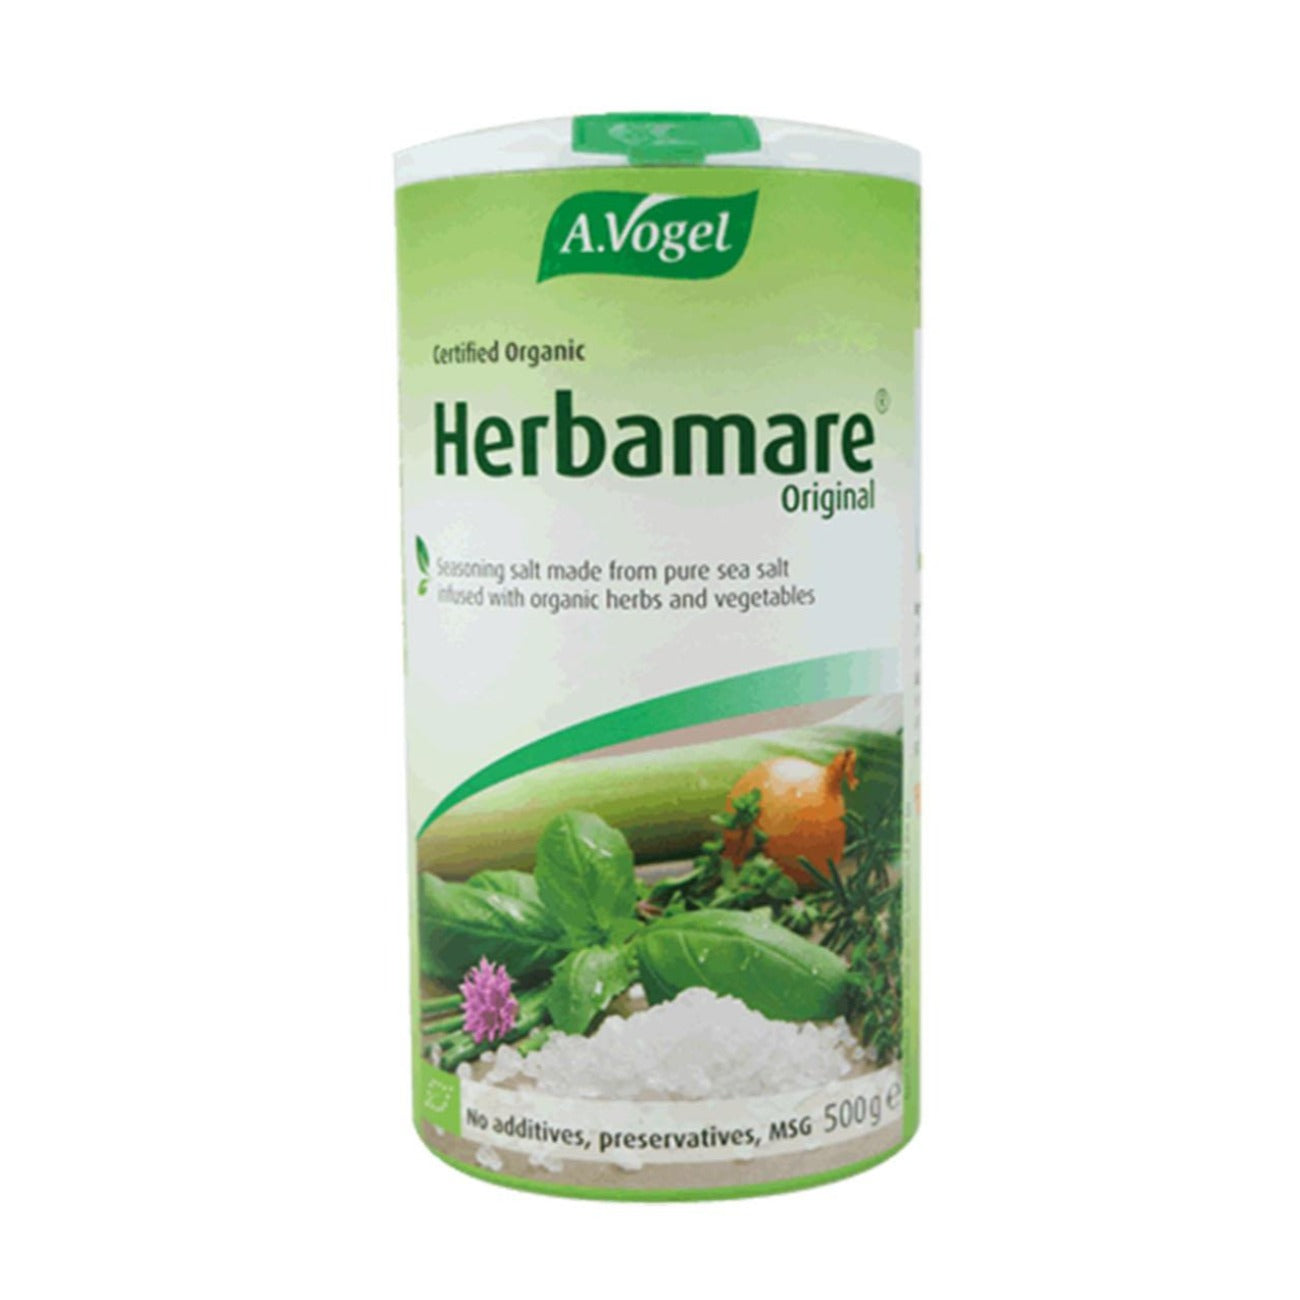 Organic Herbamare Salt Original 500g